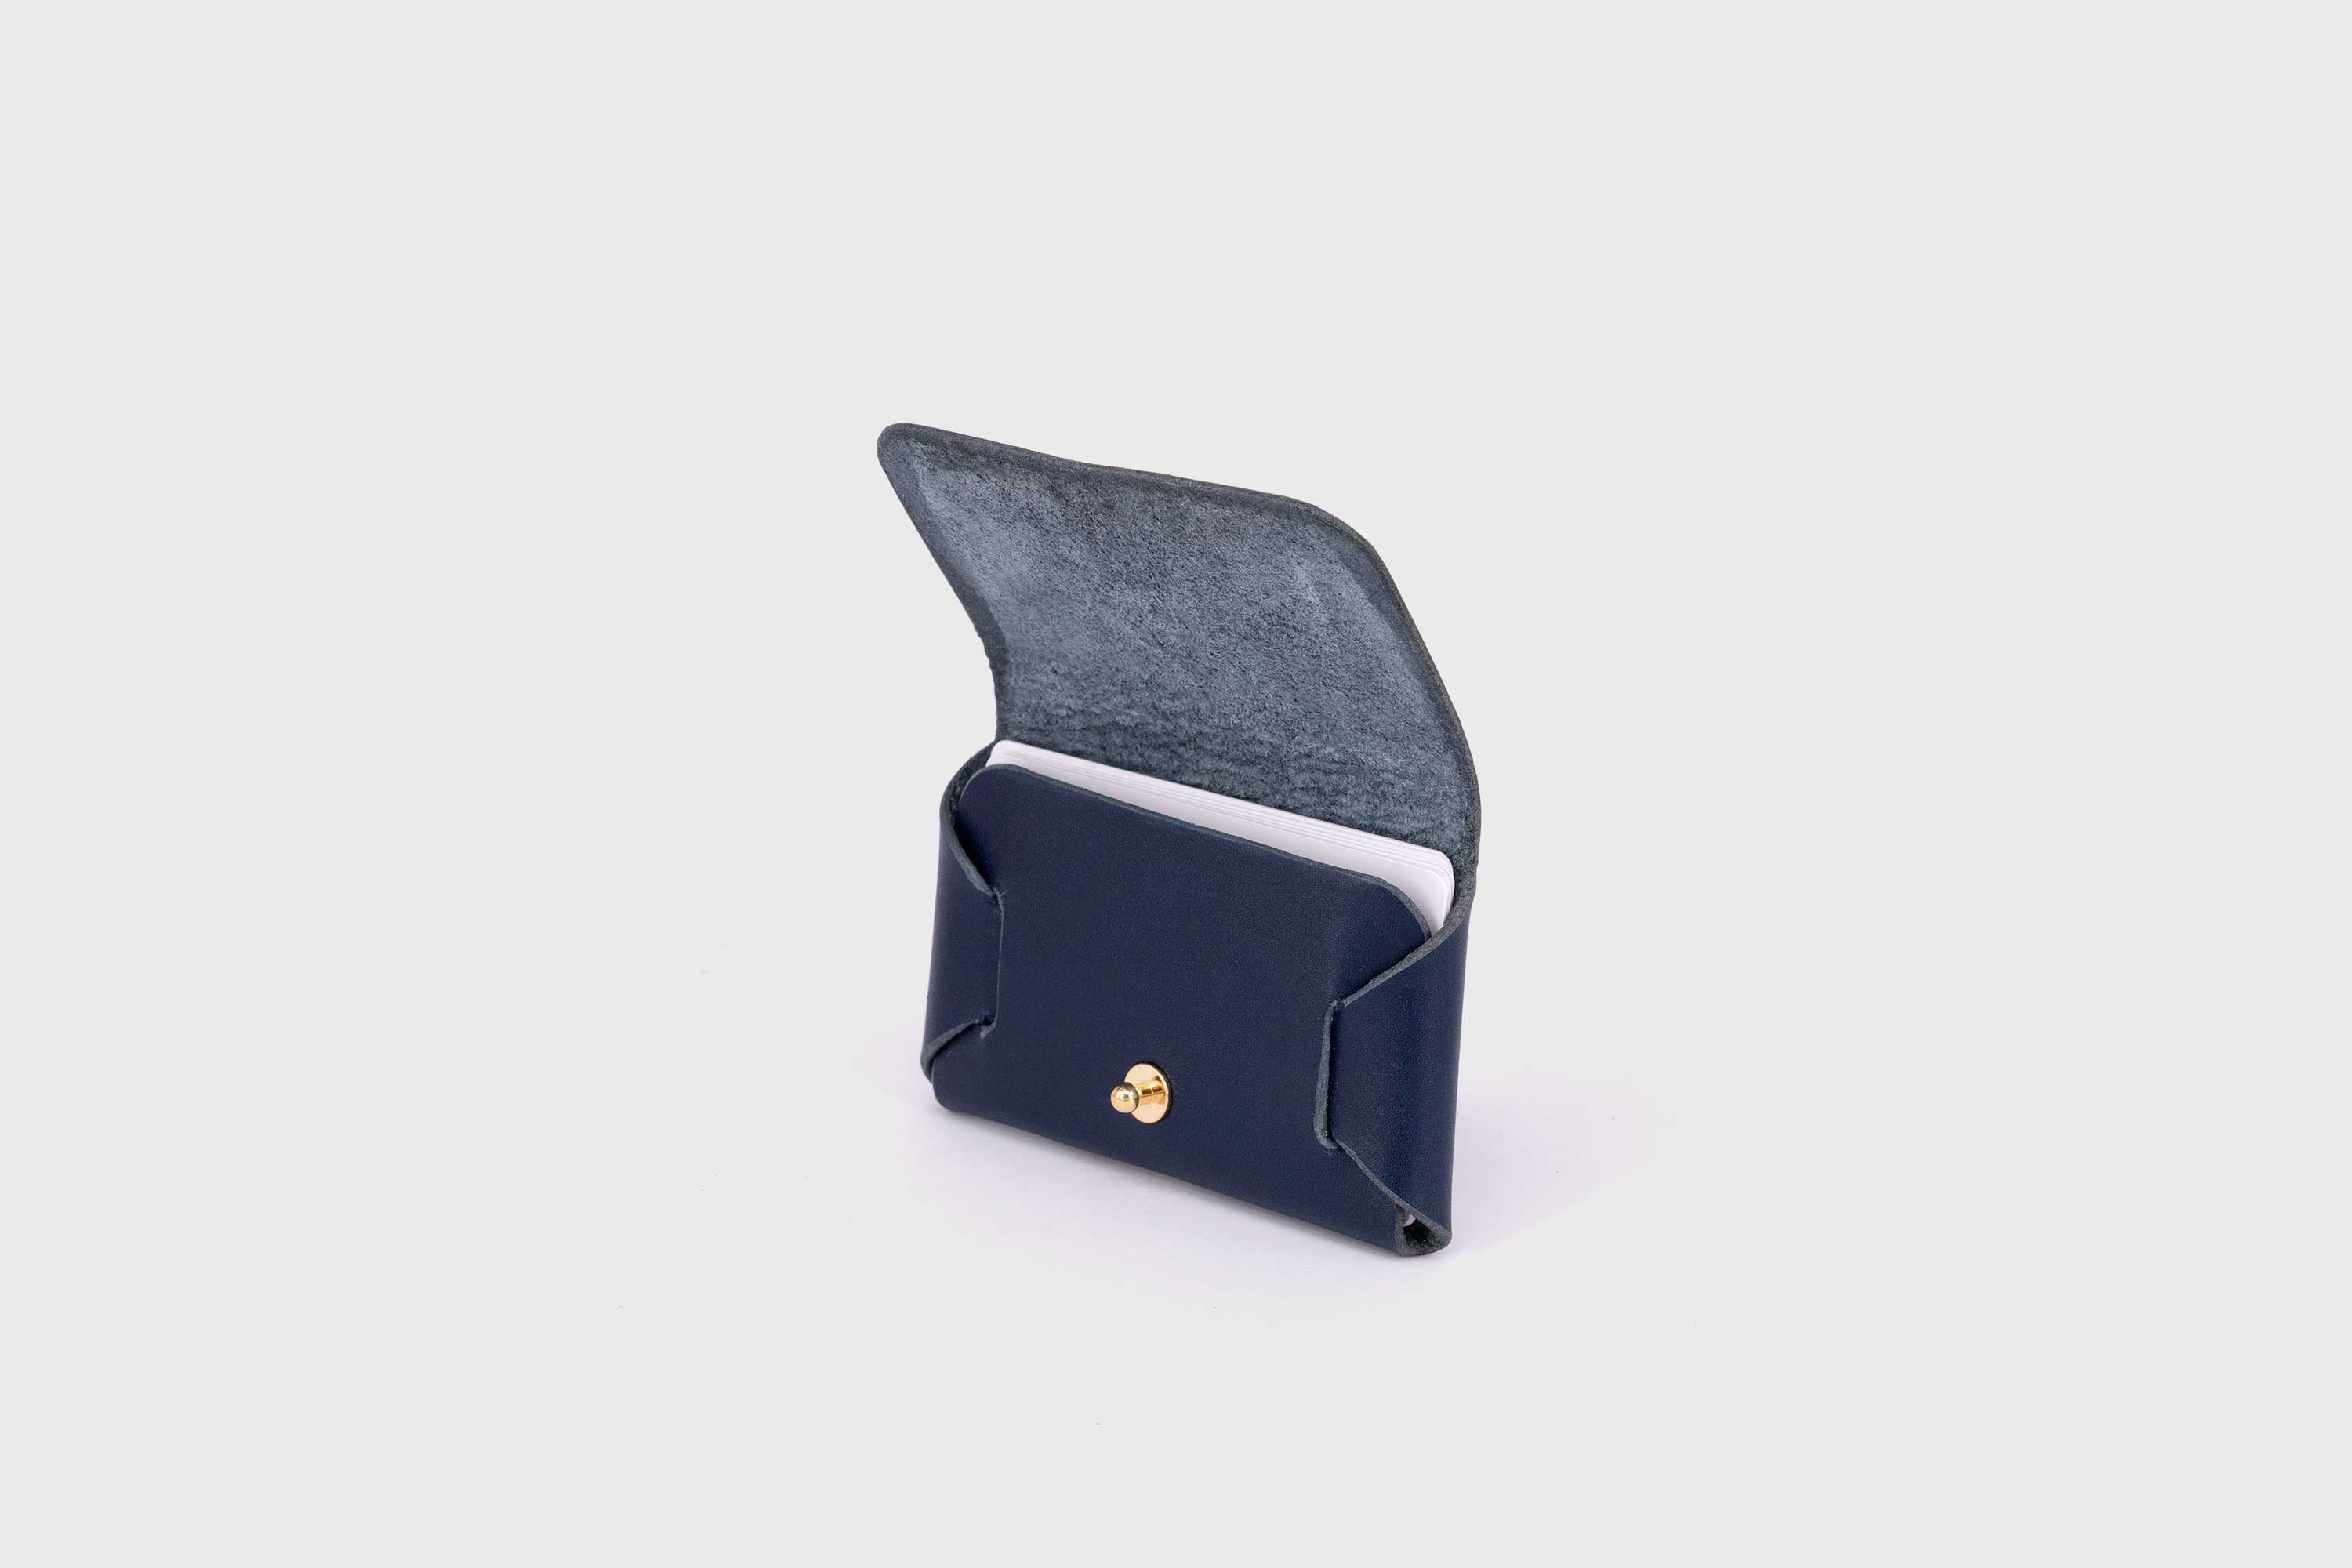 Leather wallet cardholder horizontal design marine blue color minimalist design atelier madre manuel dreesmann barcelona